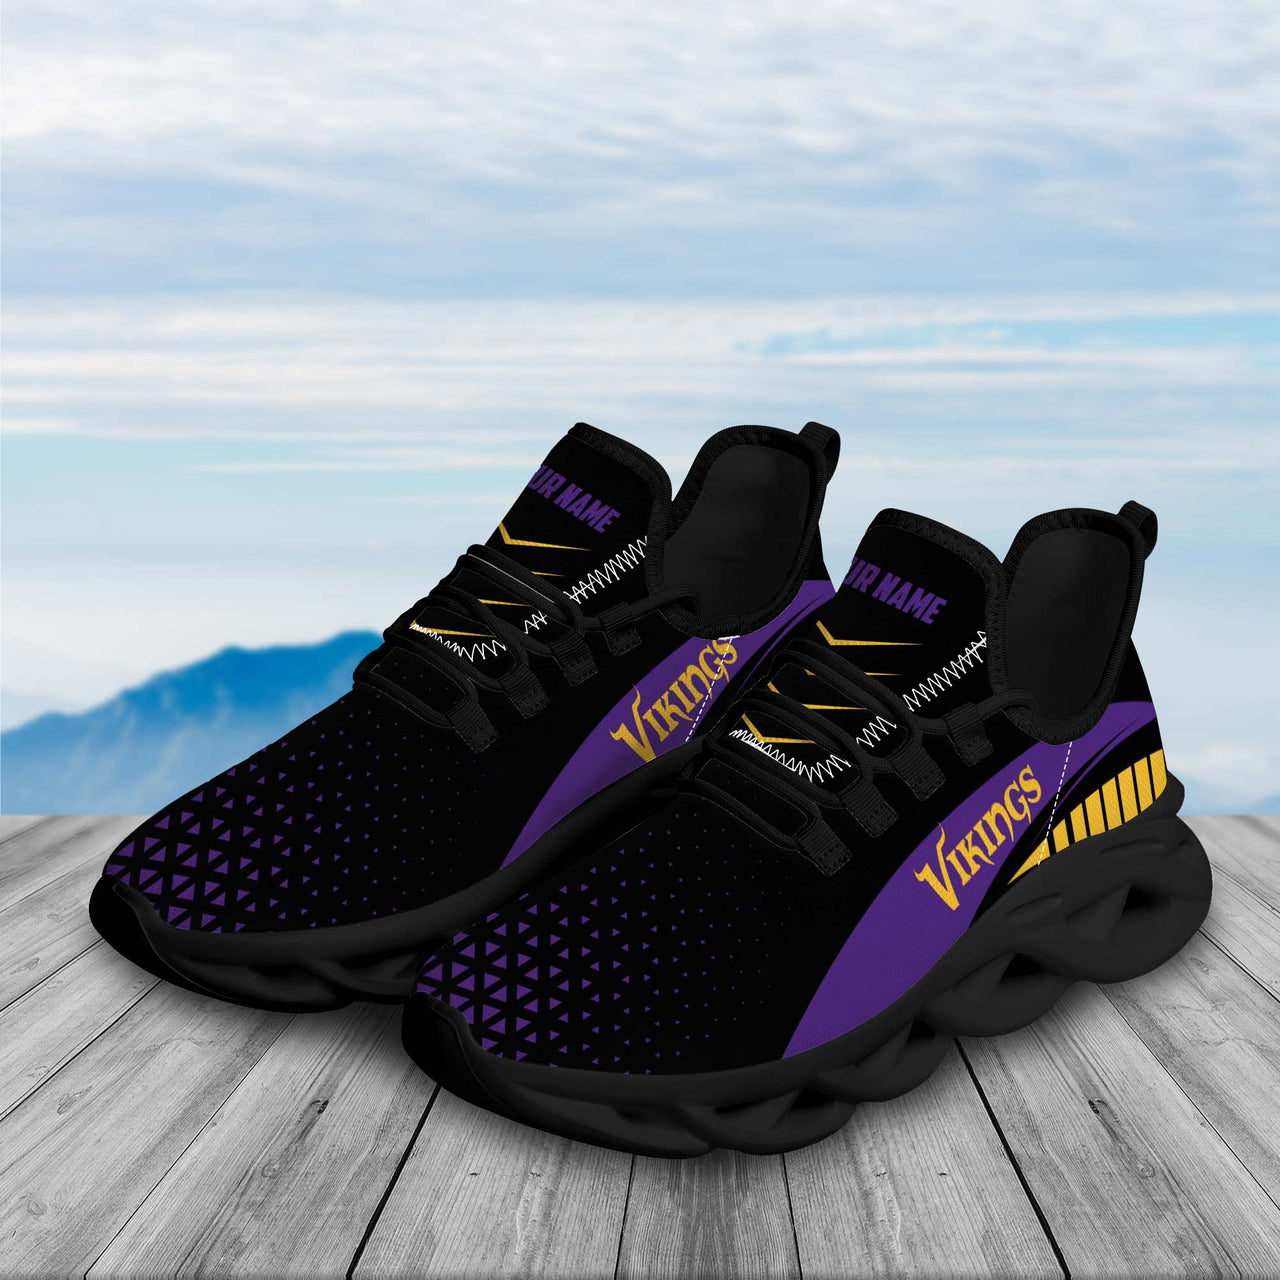 Minnesota Vikings Custom Personalized Max Soul Sneakers Running Sport Shoes for Men Women